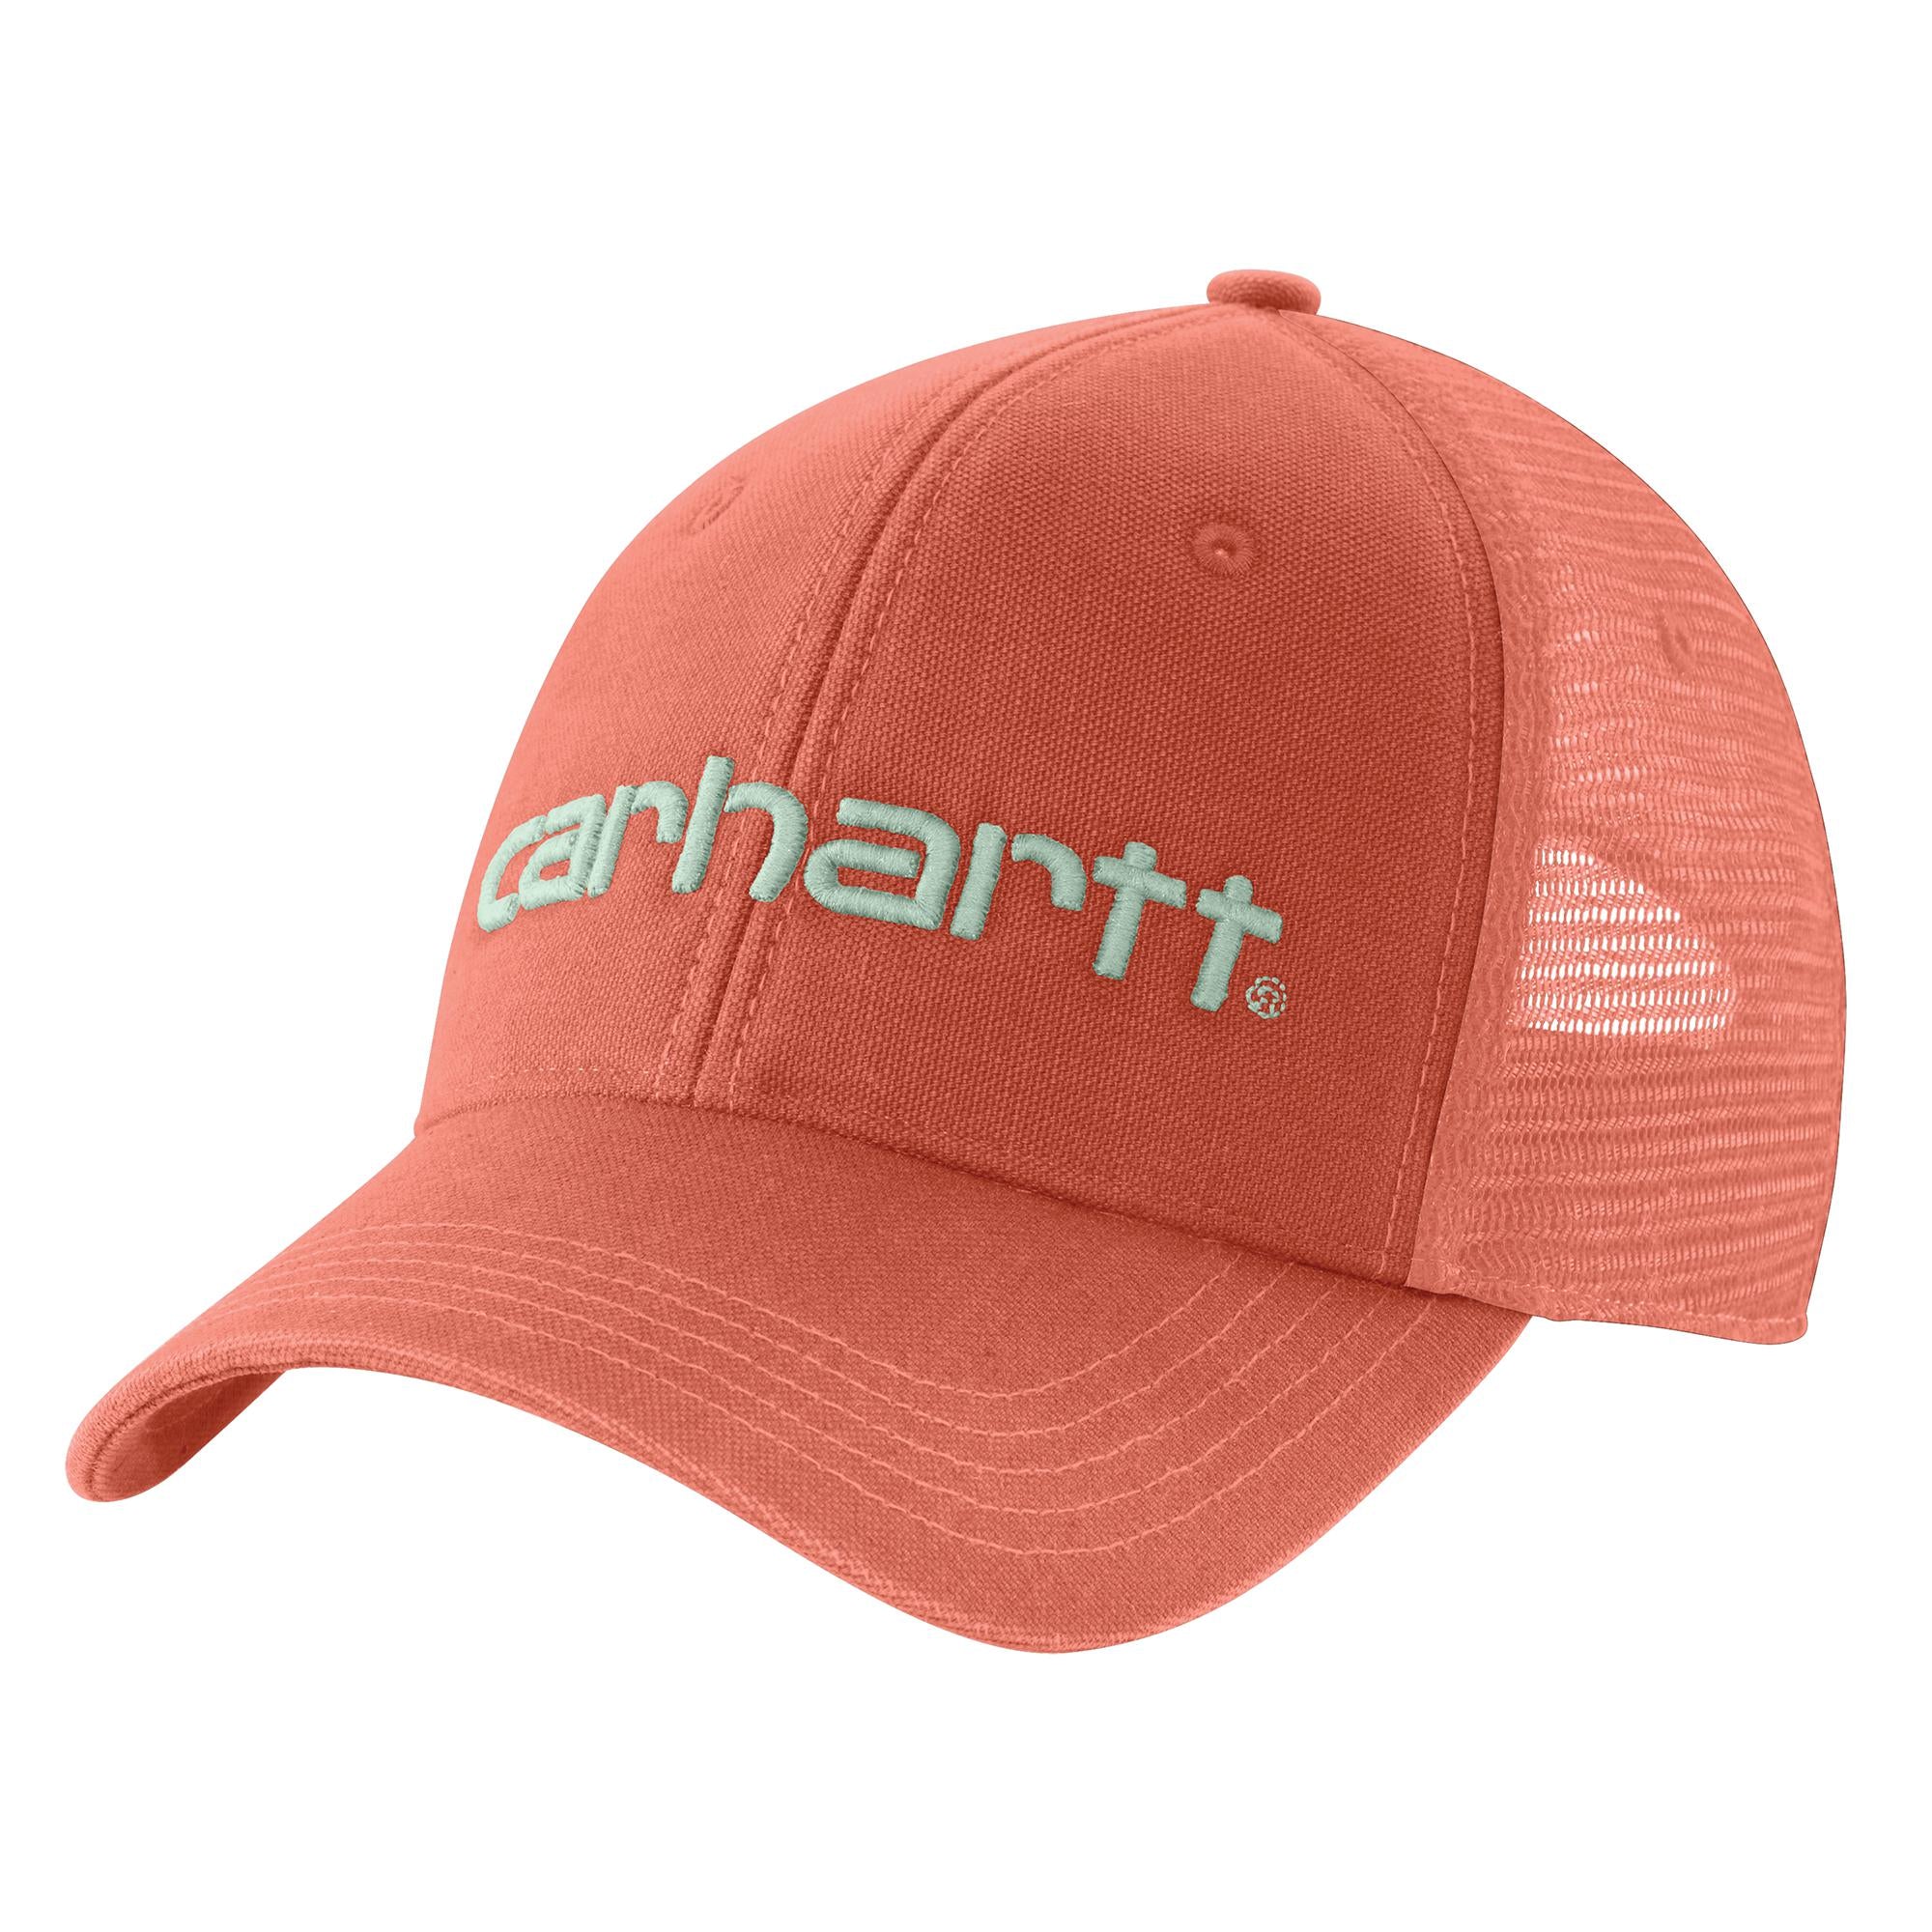 'Carhartt' Men's Canvas Mesh-Back Logo Graphic Cap - Desert Orange